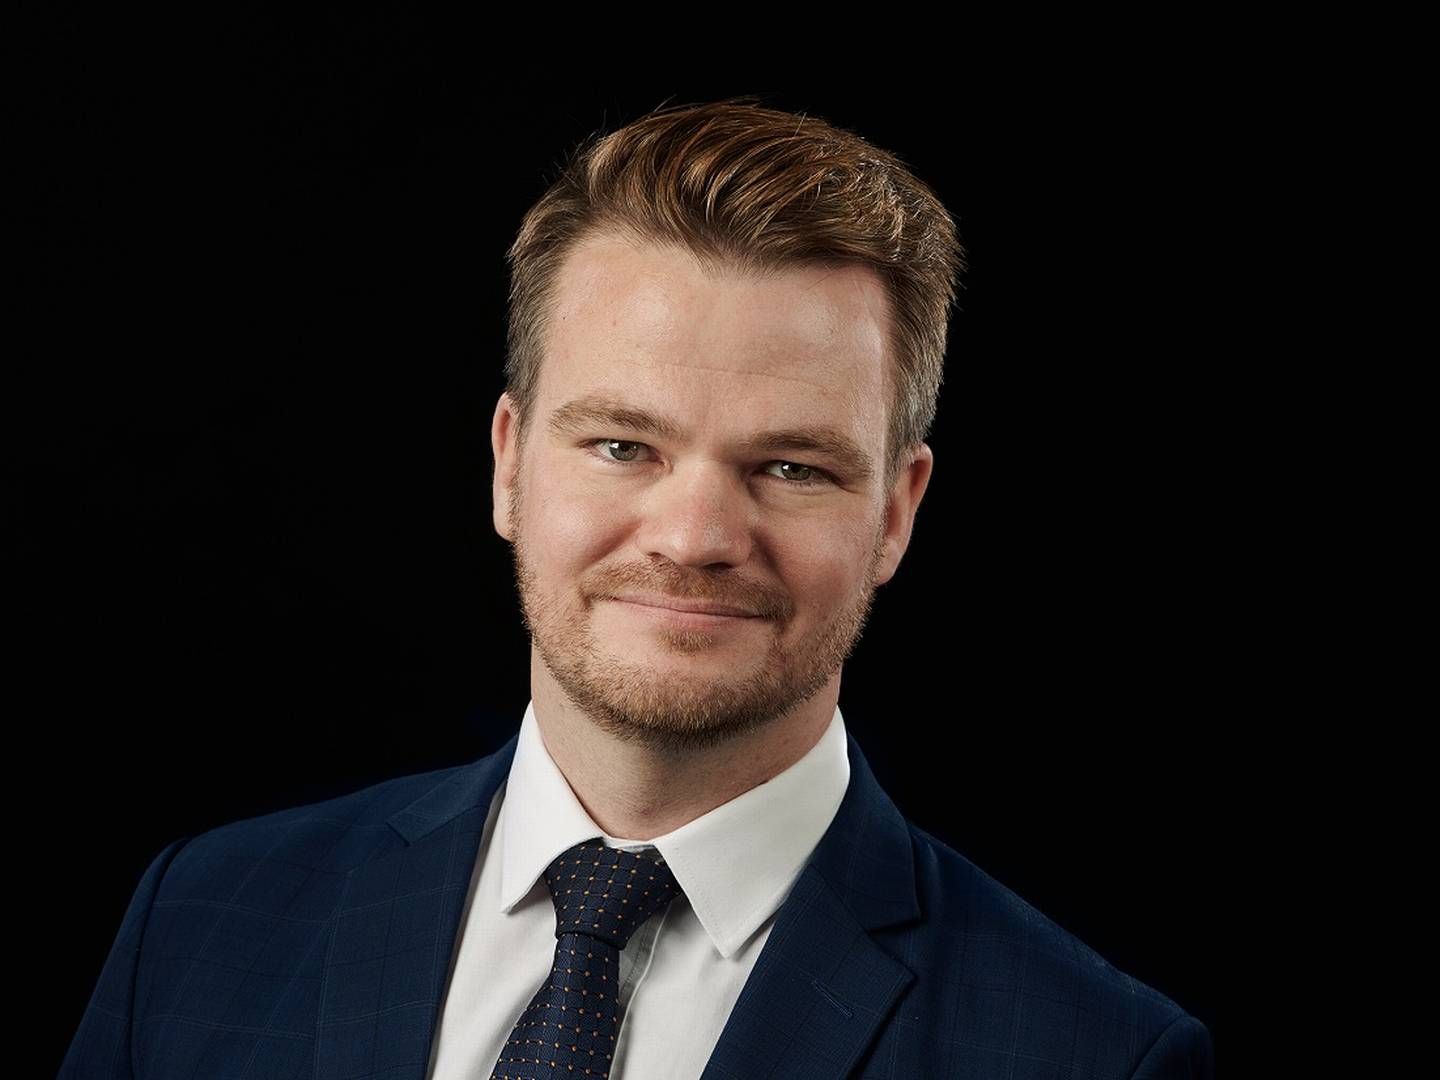 Jesper Kruse Markvart bliver kapitalejer hos fynske Focus Advokater, hvor han har slået sine folder siden 2013. | Foto: Focus Advokater / Pr